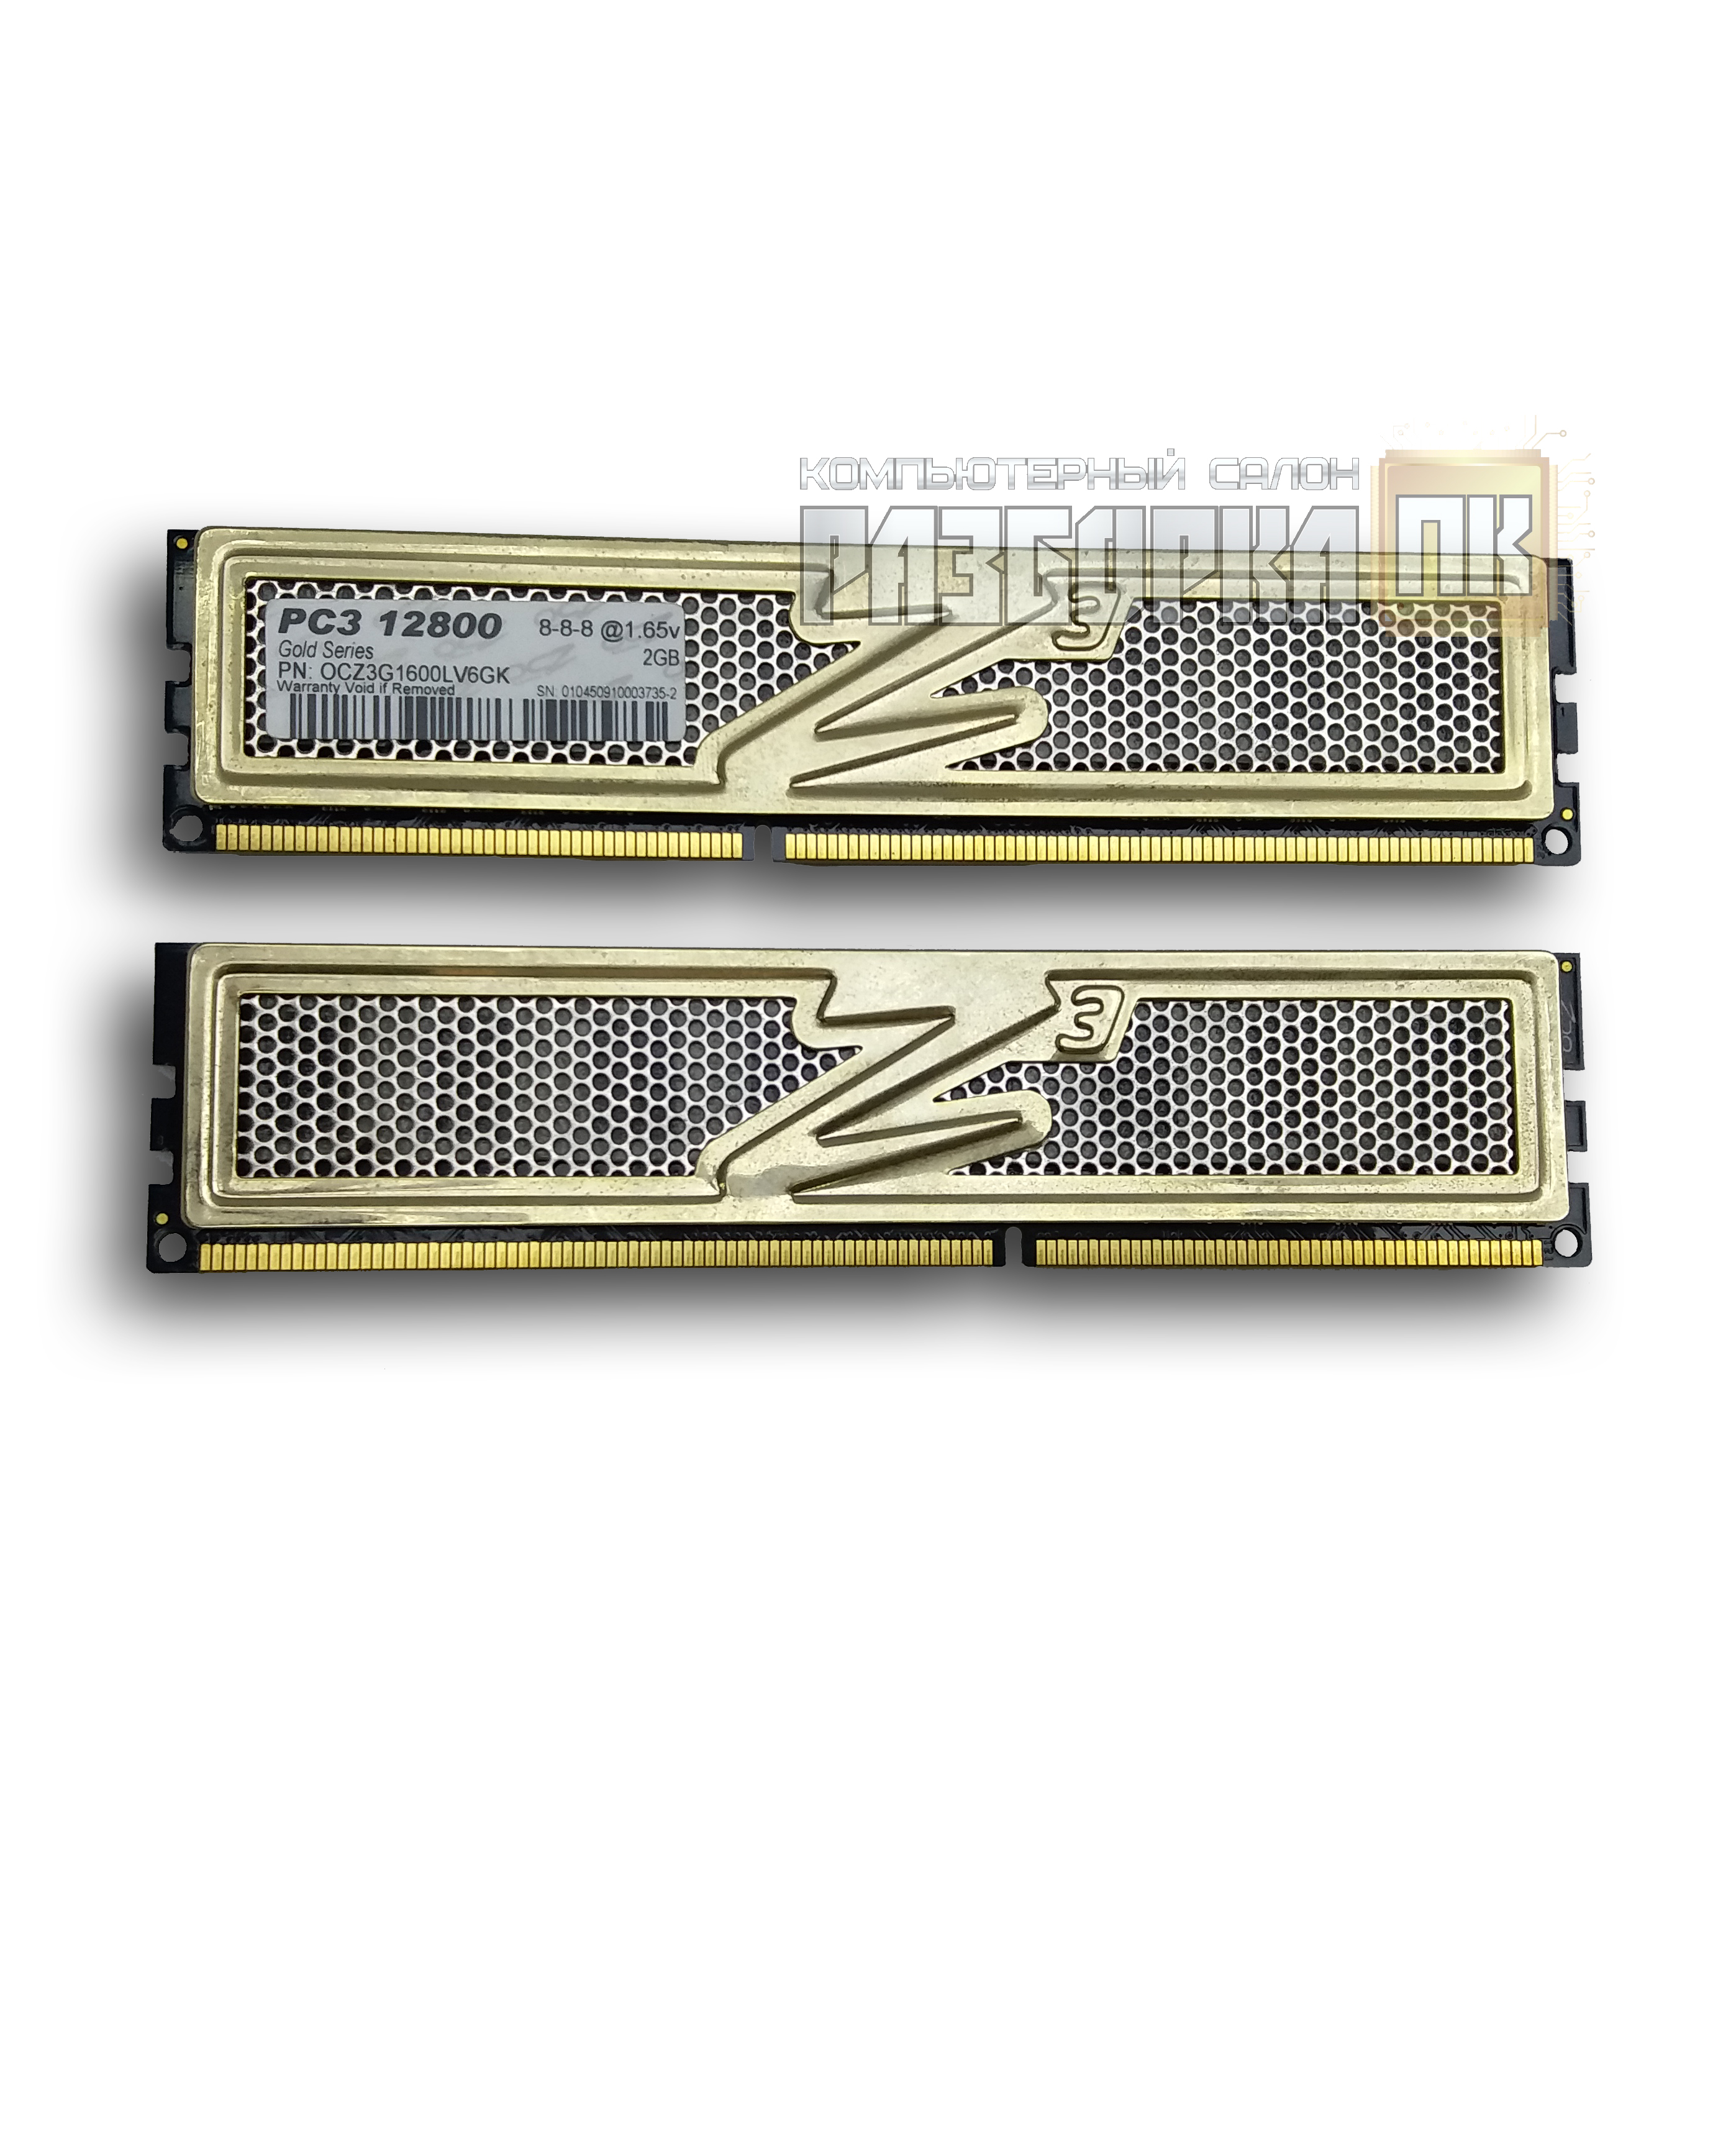 Оперативная память DIMM DDR-III 2x2GB PC3 12800 1600Mhz OCZ Gold kit of two